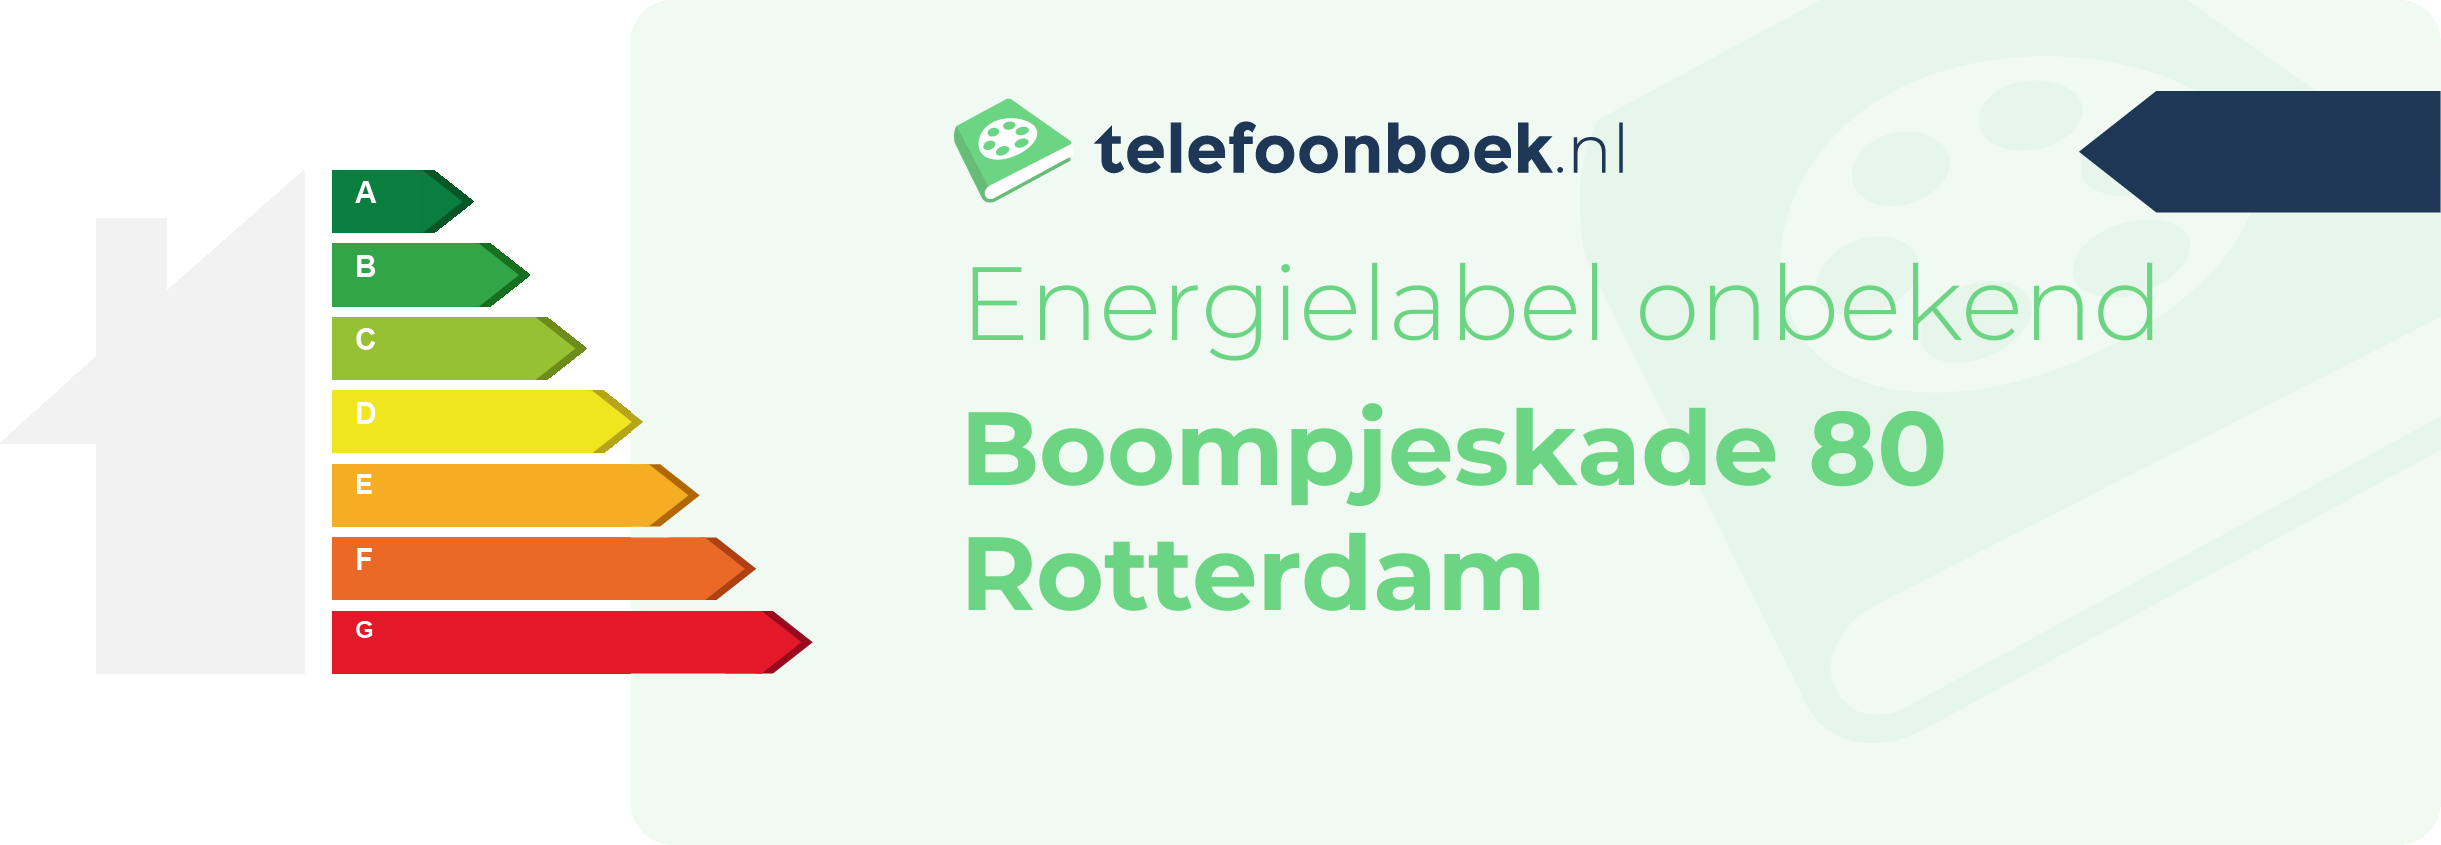 Energielabel Boompjeskade 80 Rotterdam